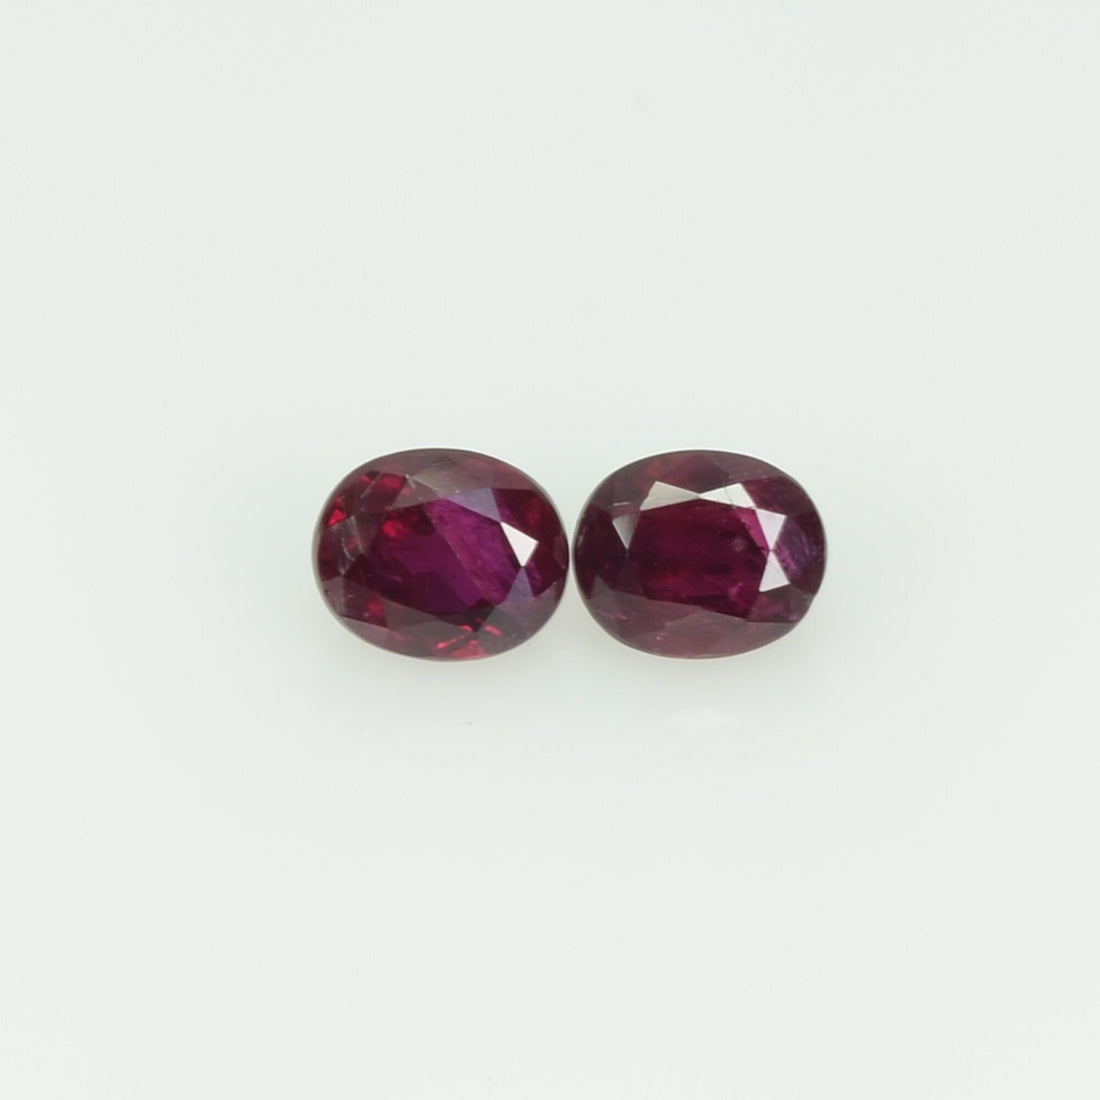 4x3.5 mm Natural Thai Ruby Loose Gemstone Oval Cut